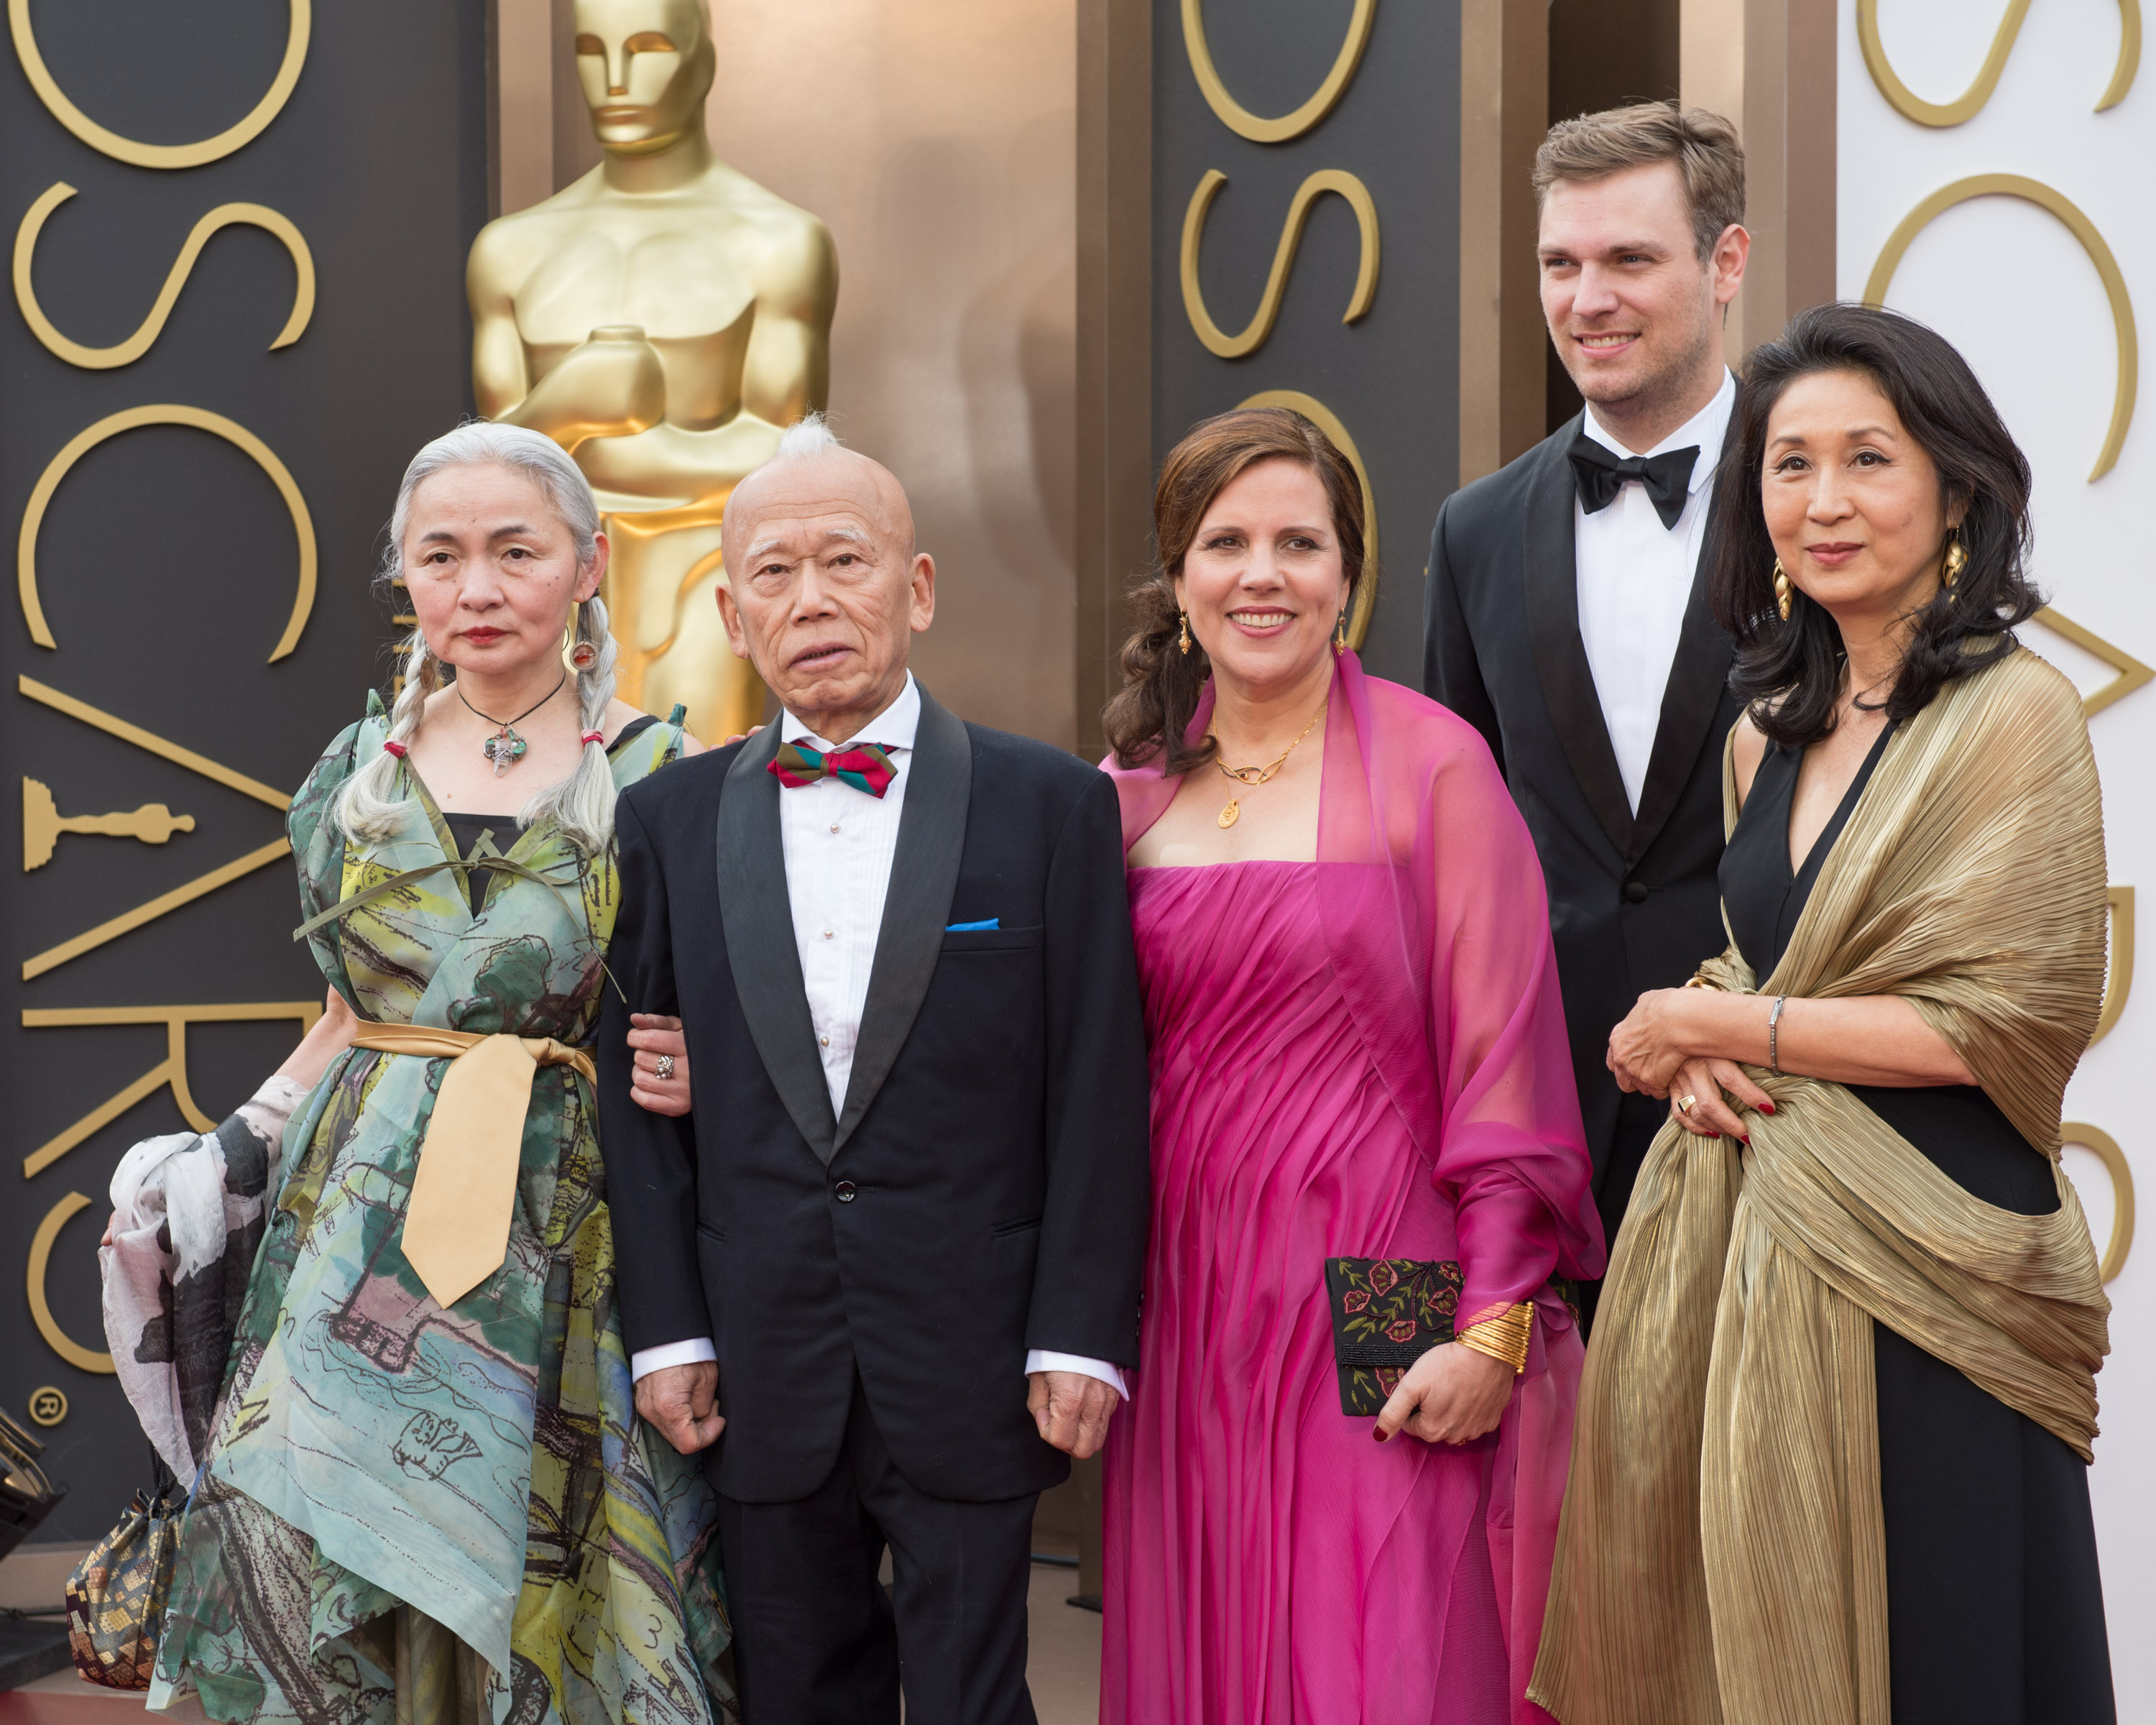 Noriko Shinohara, Ushio Shinohara, Lydia Dean Pilcher, Zachary Heinzerling, Kiki Miyake at the 86th Academy Awards on March 2nd, 2014